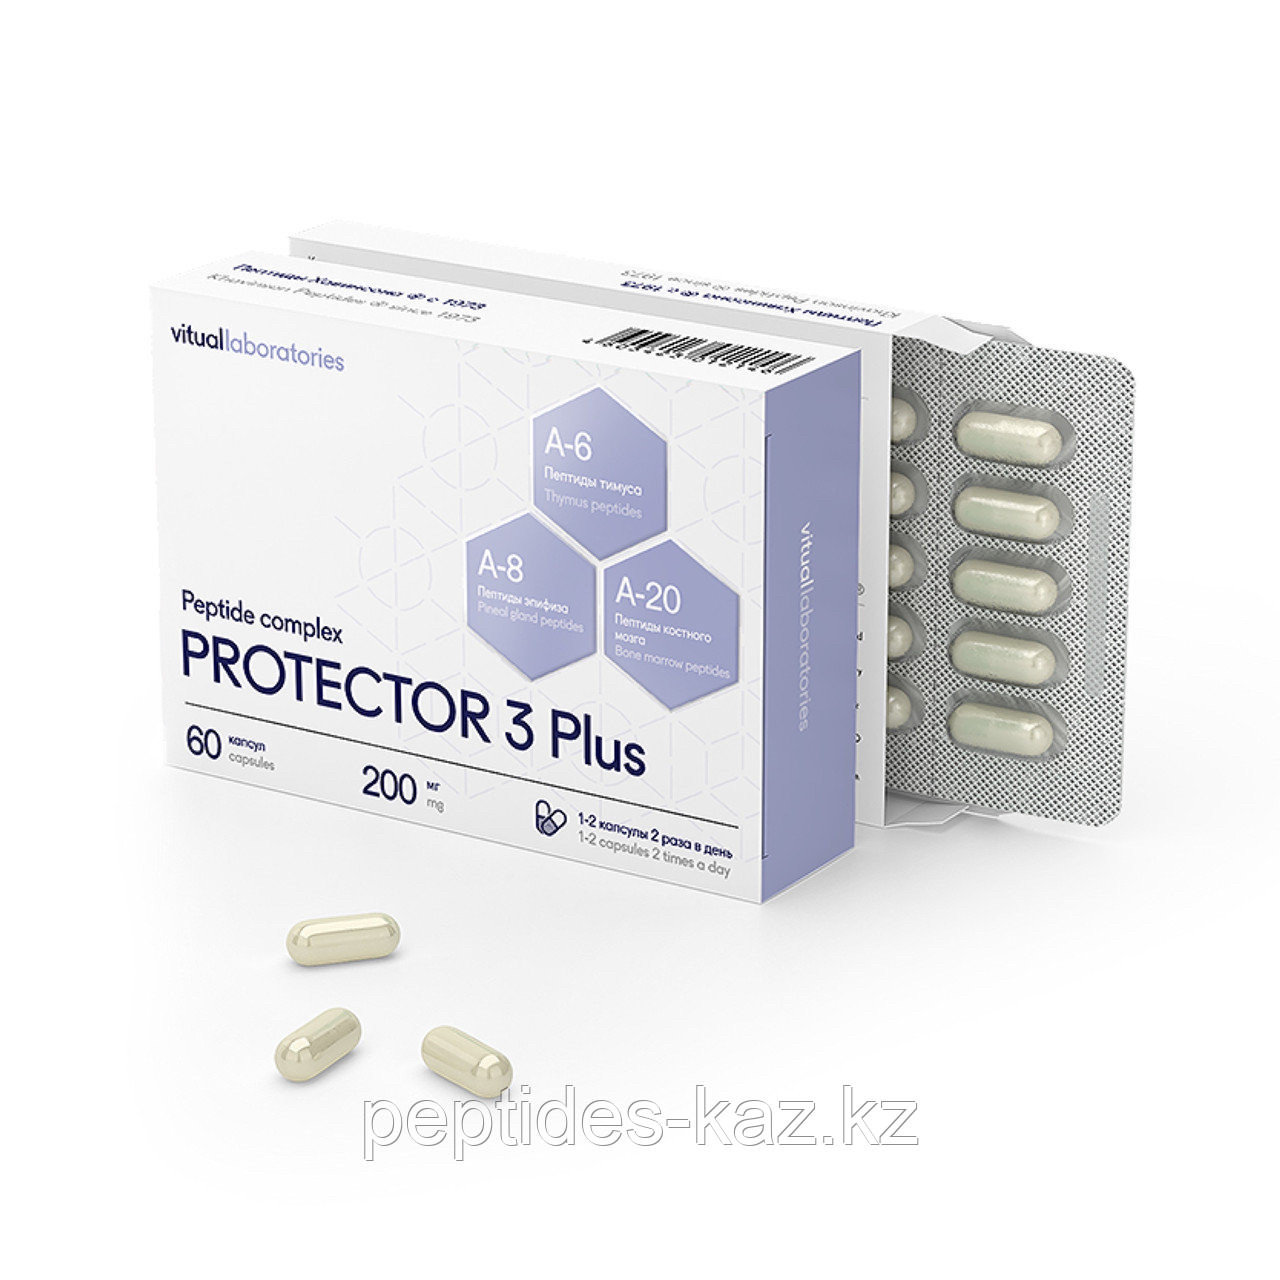 PROTECTOR 3 Plus® №60, крепкий иммунитет